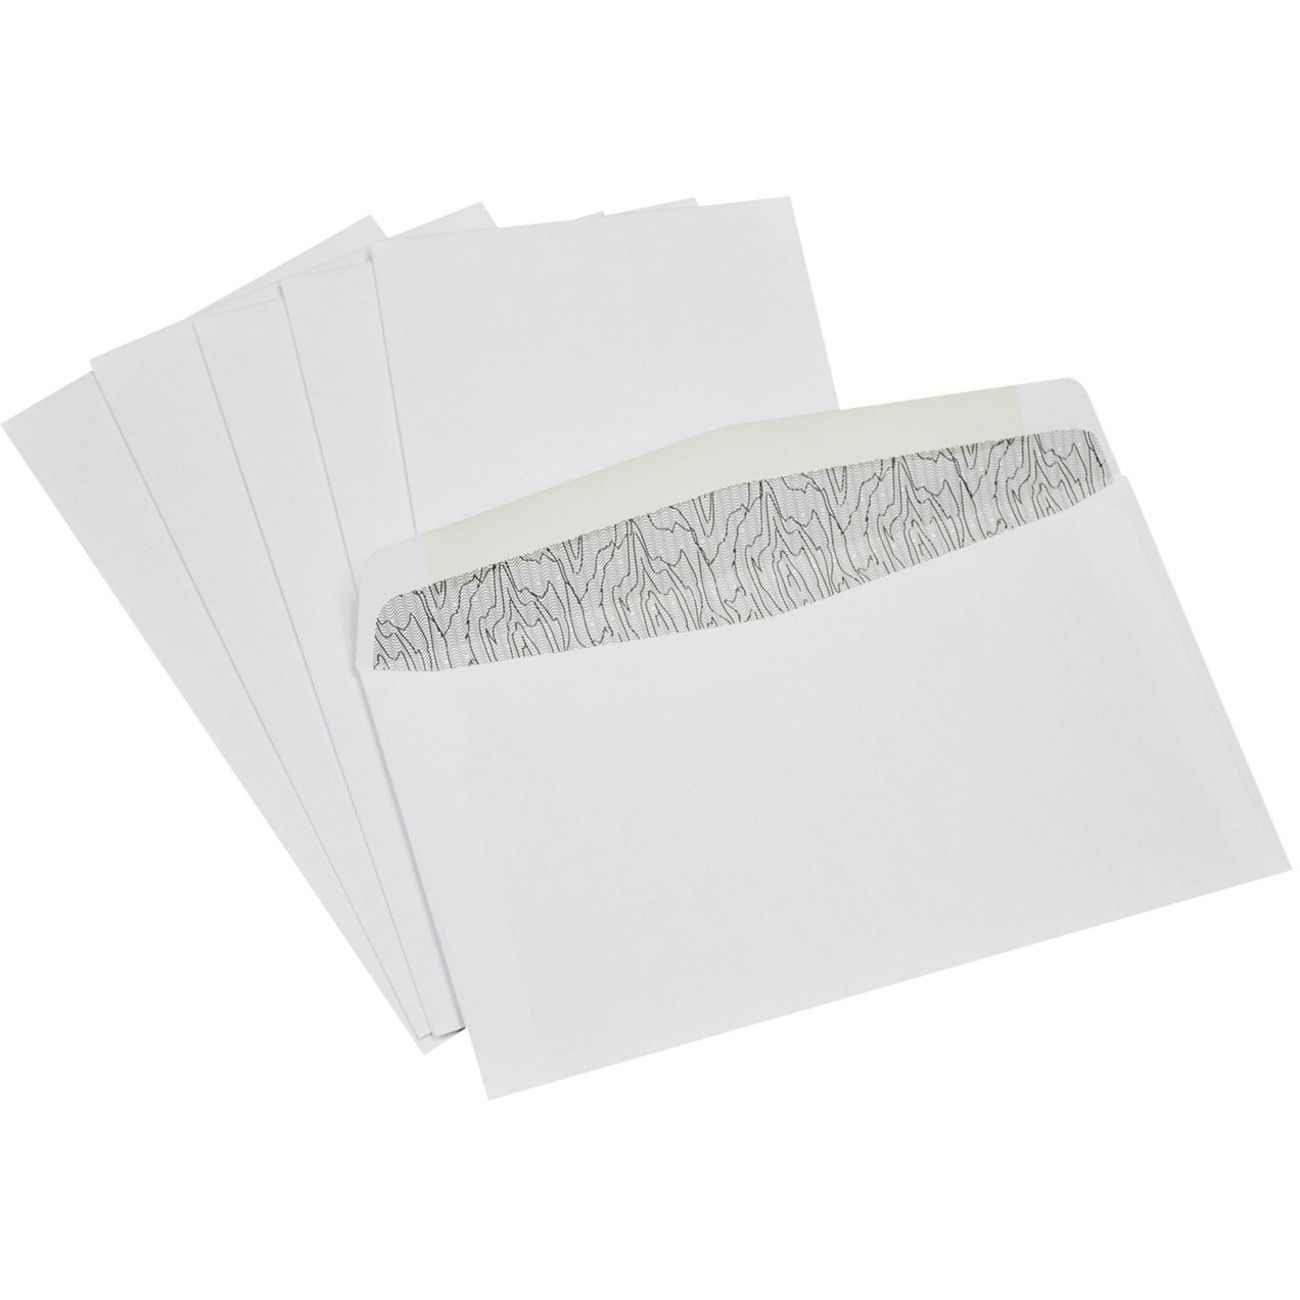 Open Side- 24# White Wove 6 x 9 Box of 1000 - Jumbo Envelope Series 6 x 9 Booklet Envelope 